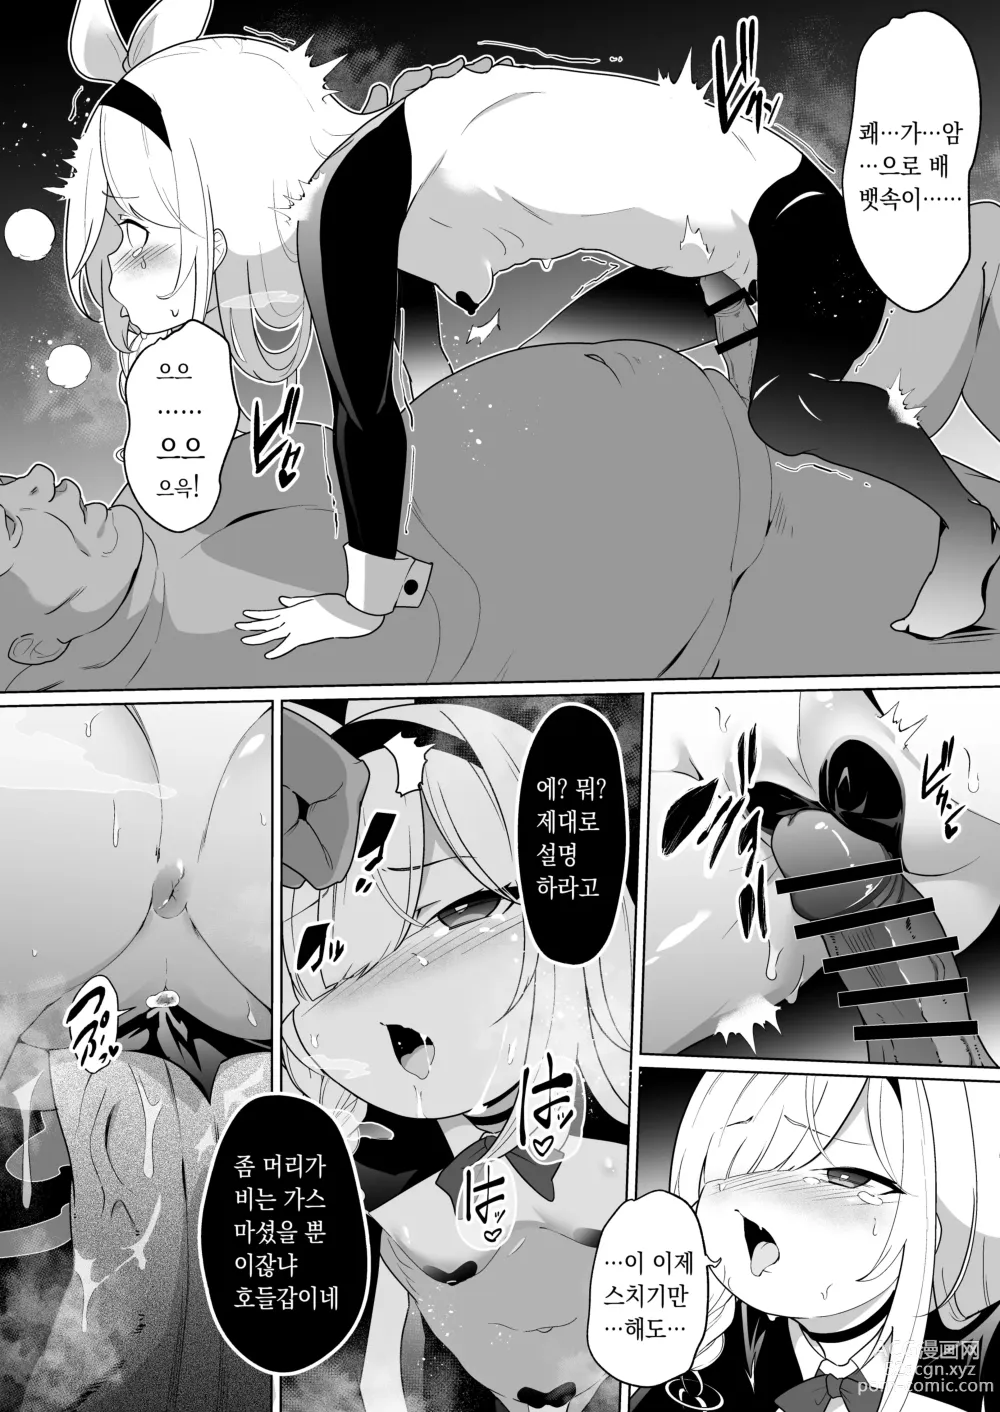 Page 27 of doujinshi 싫어하는 프라나가 기꺼이 봉사하는 이야기